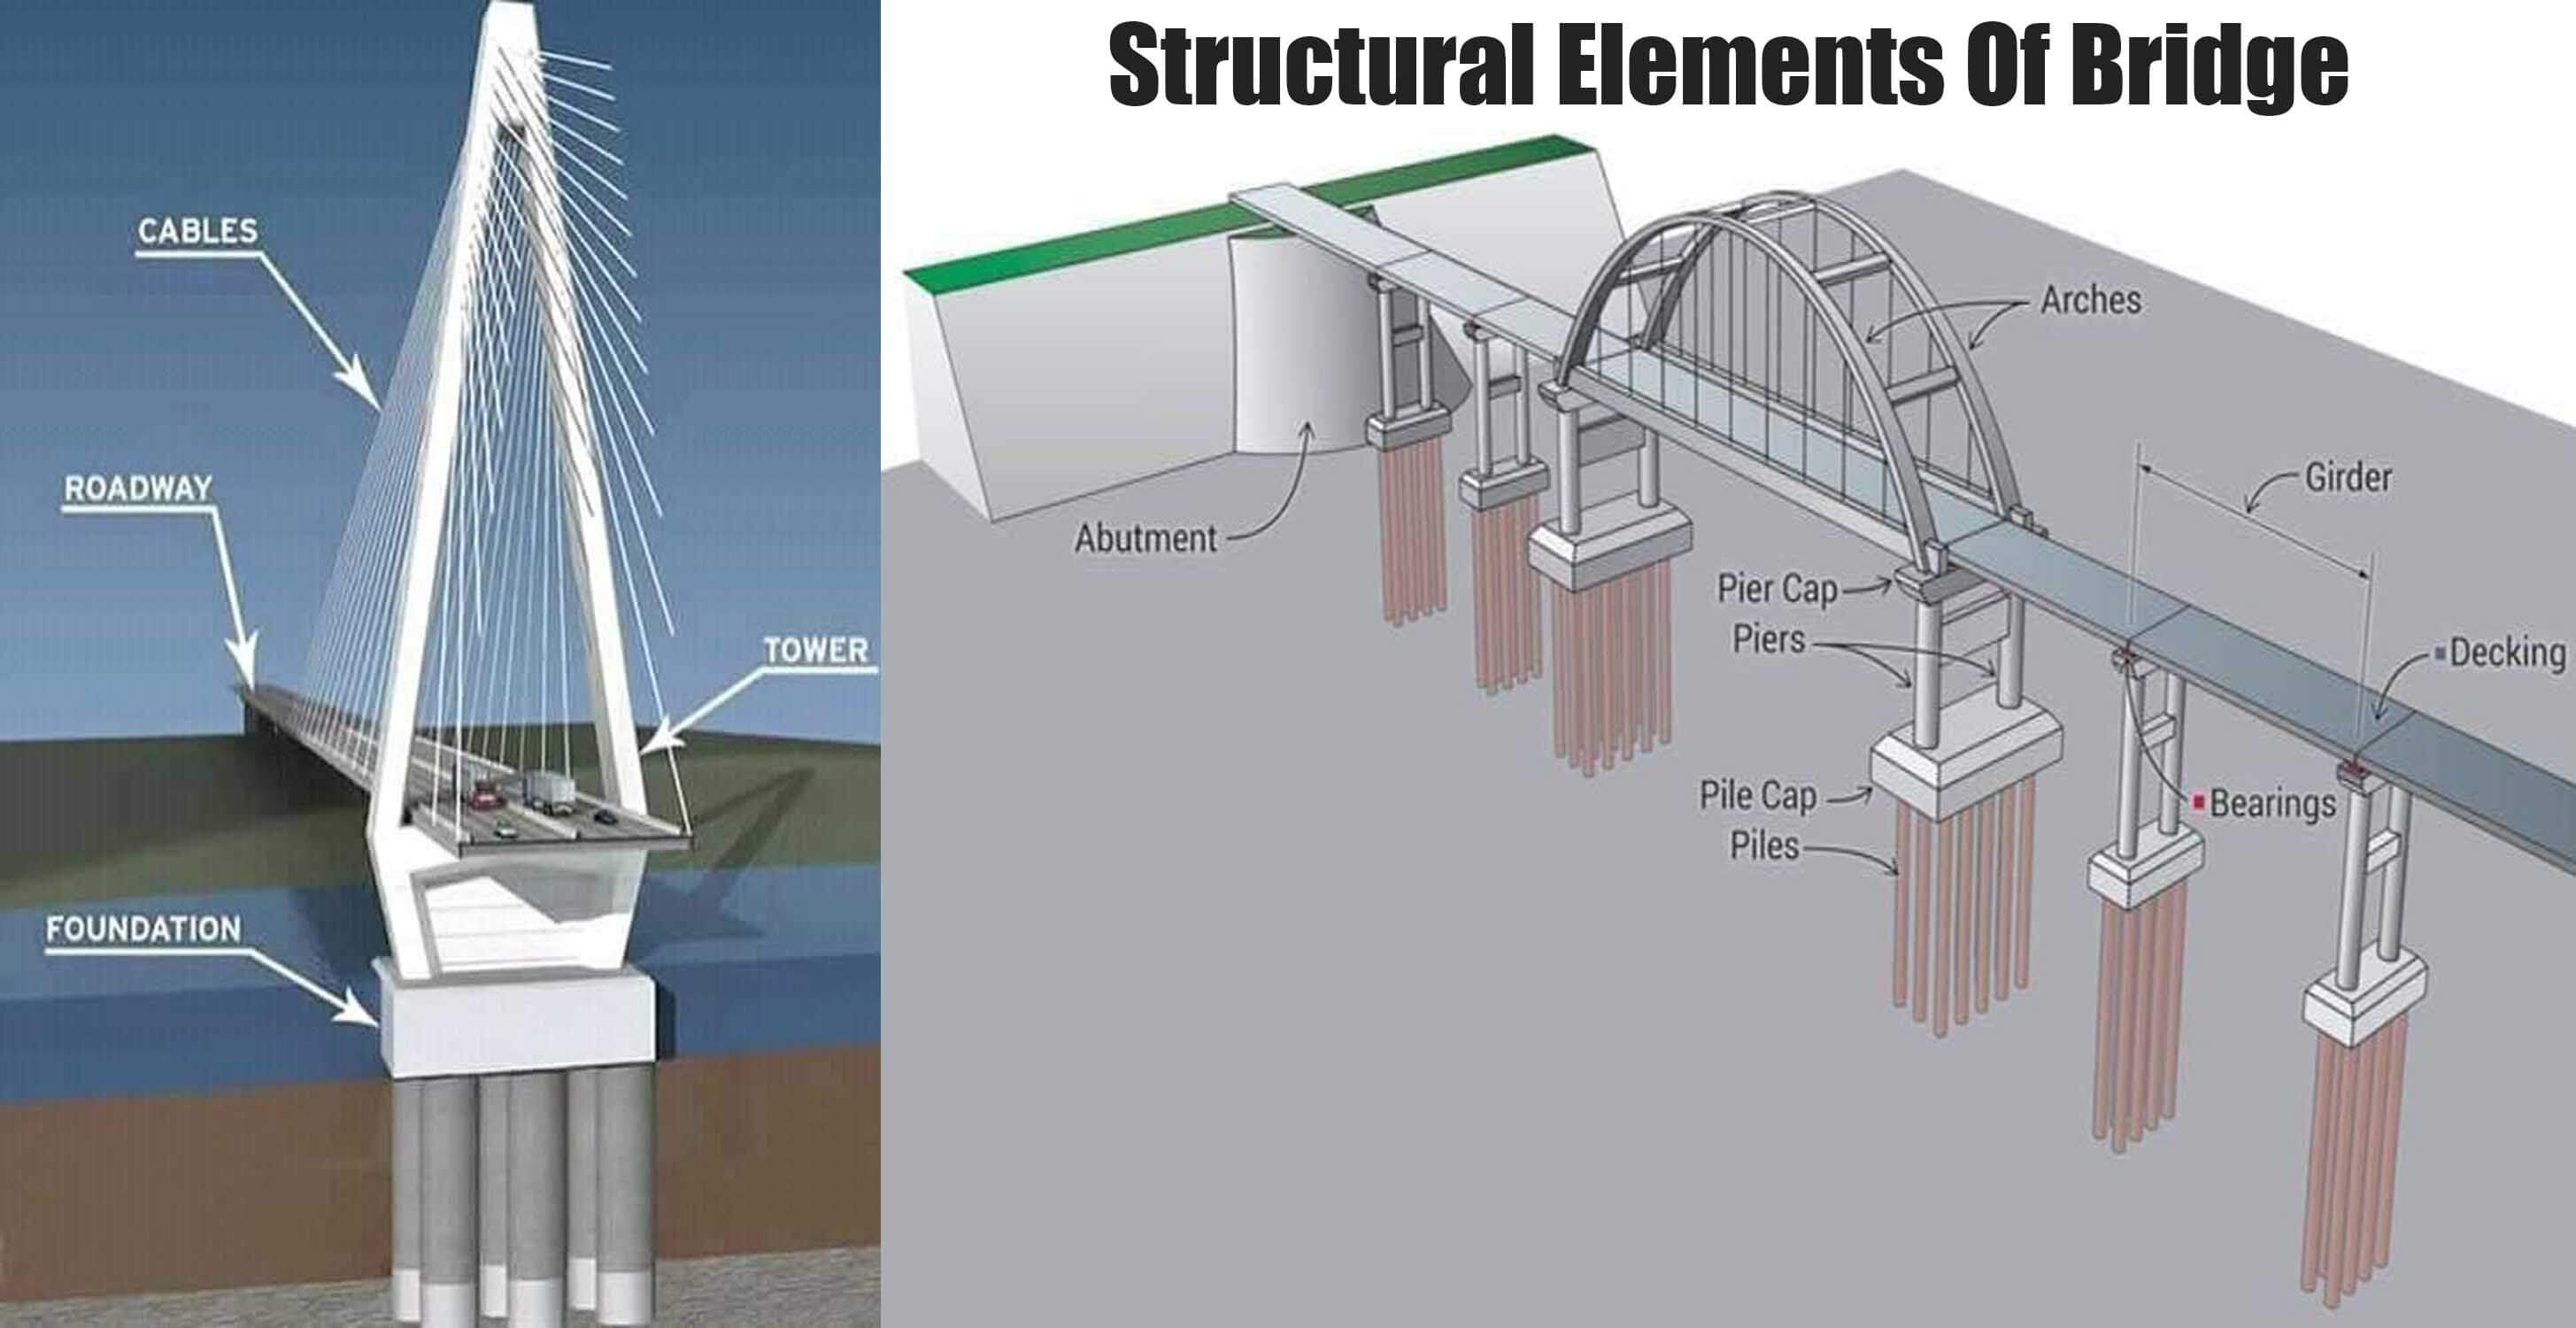 Structural elements of Bridge